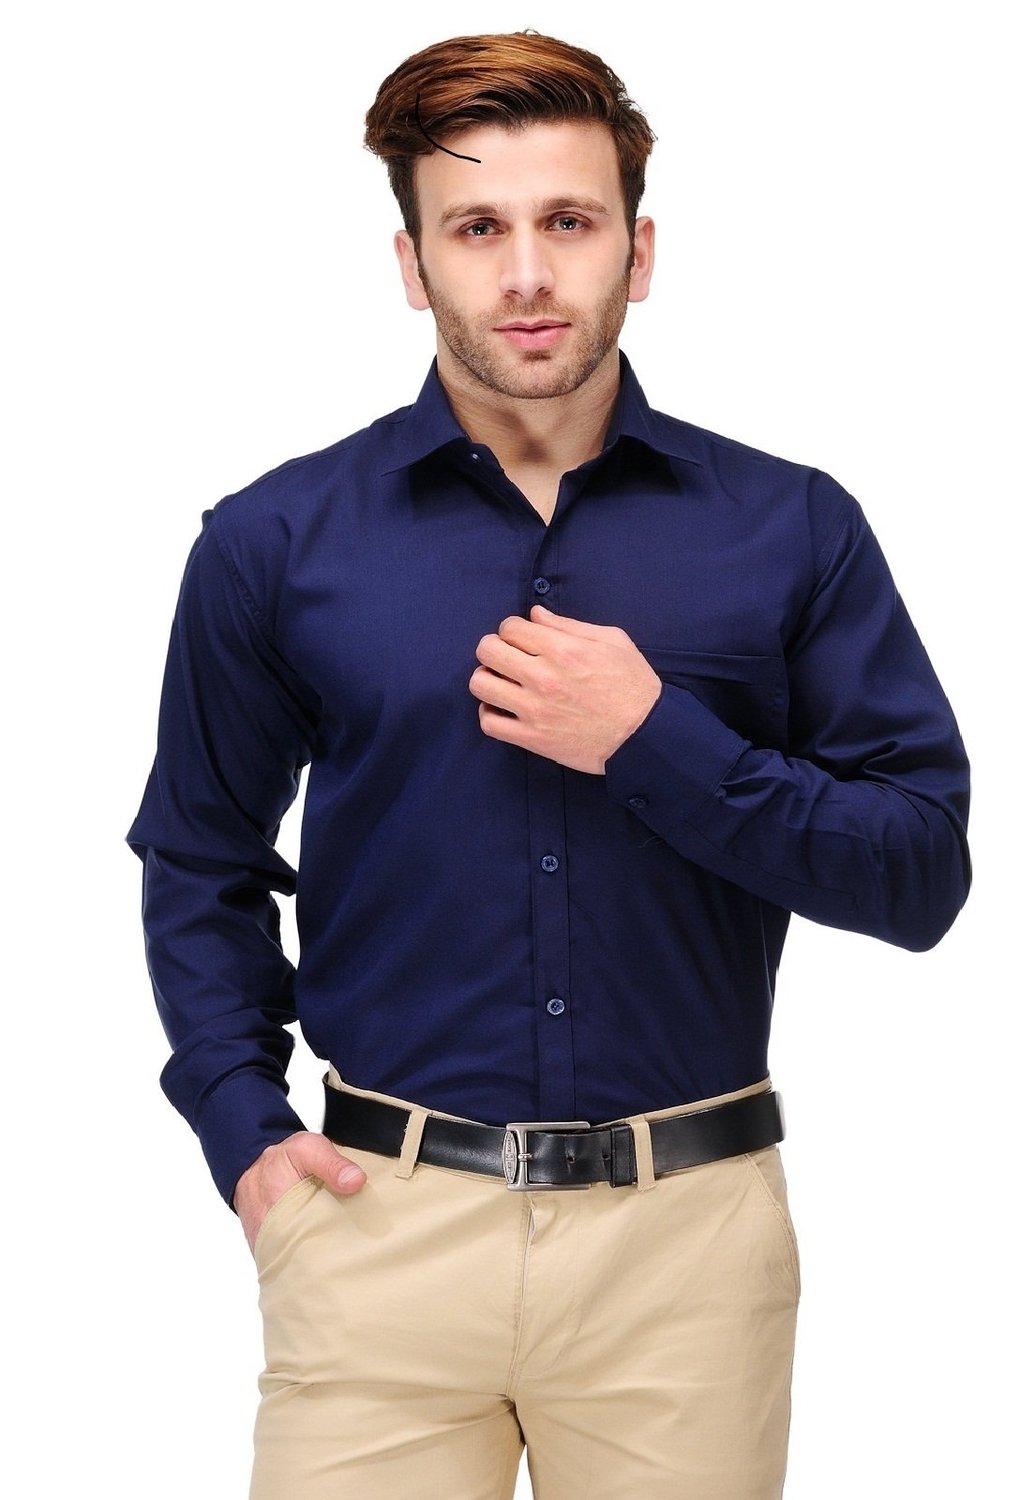 DEAL4LOOT: Amazon Deals-Buy Men's Formals Shirts Under Rs 399